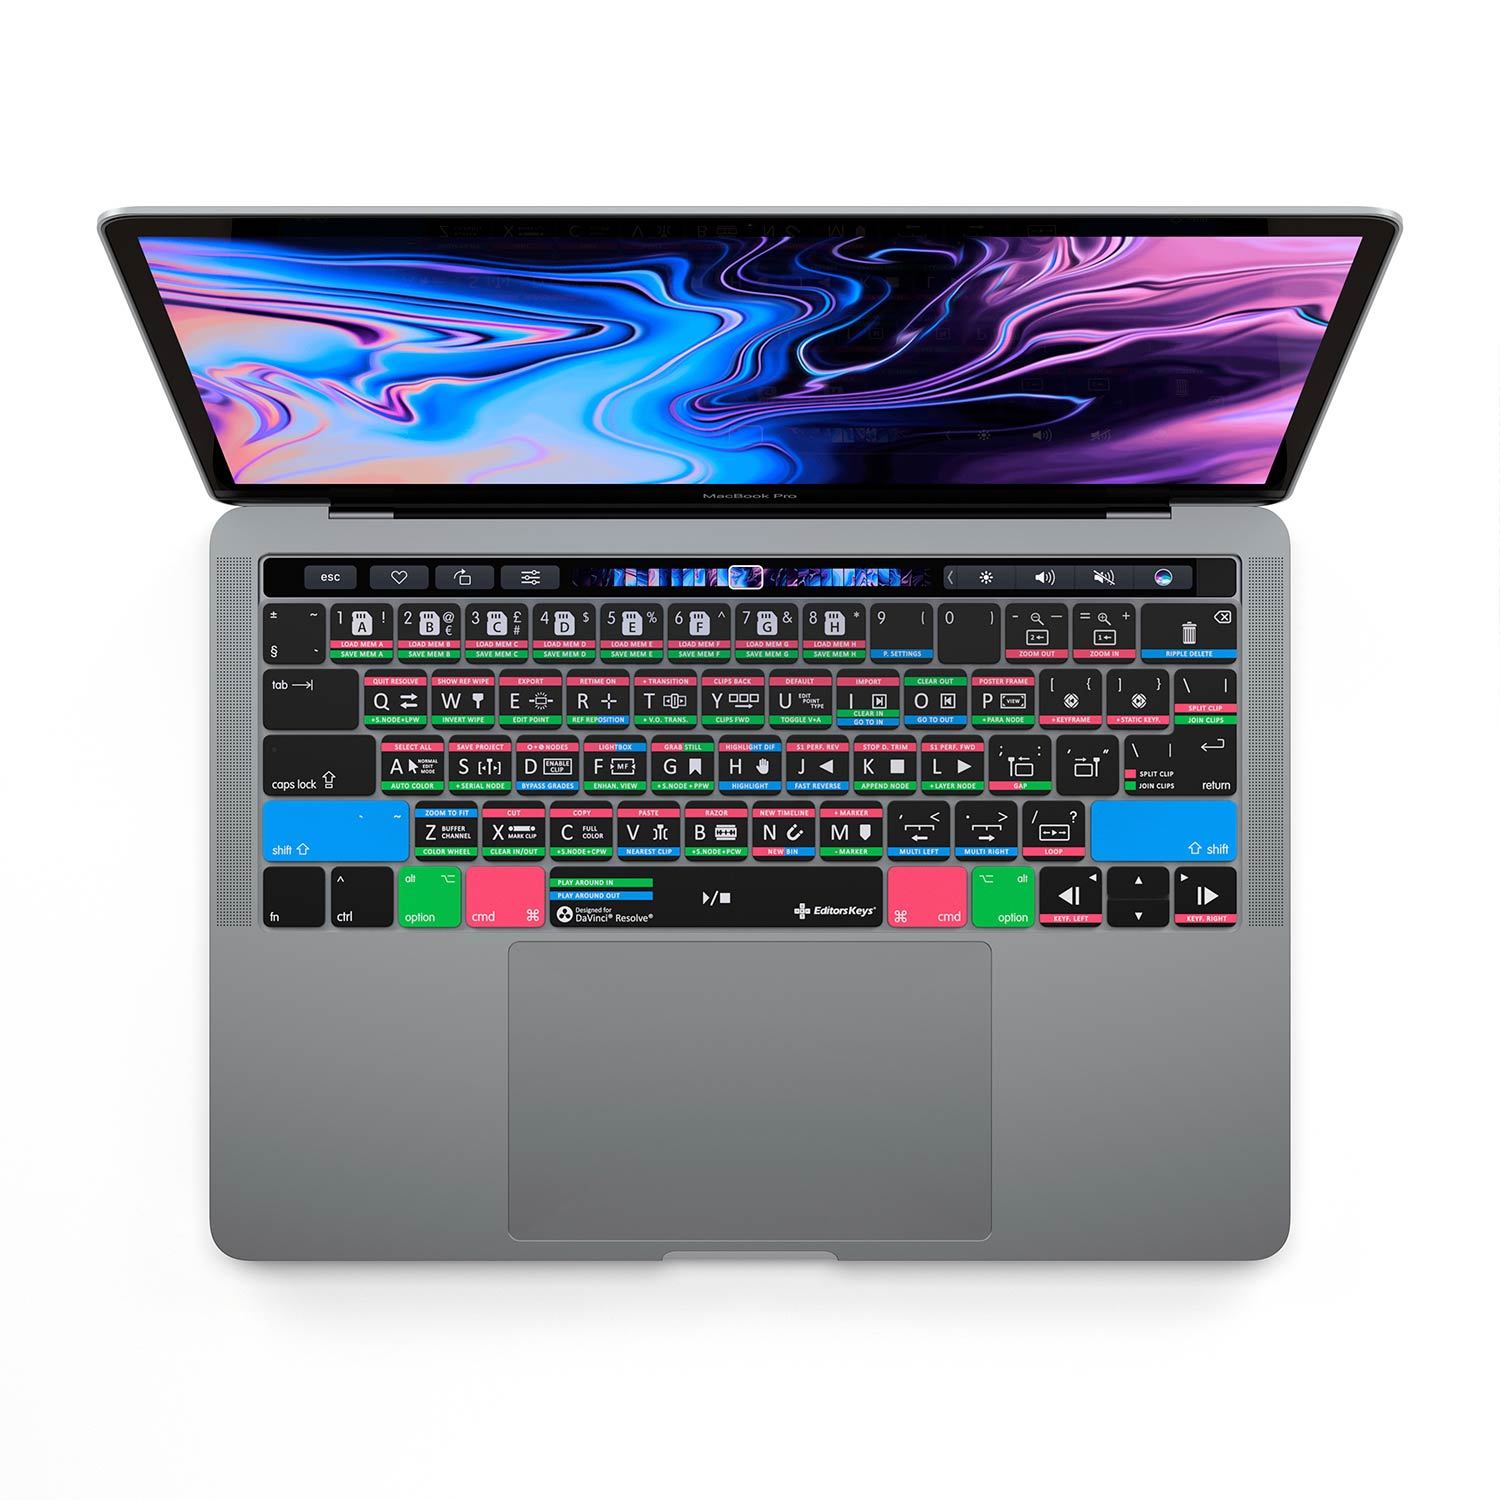 Davinci Resolve Keyboard Covers For Macbook And Imac Protection Editors Keys